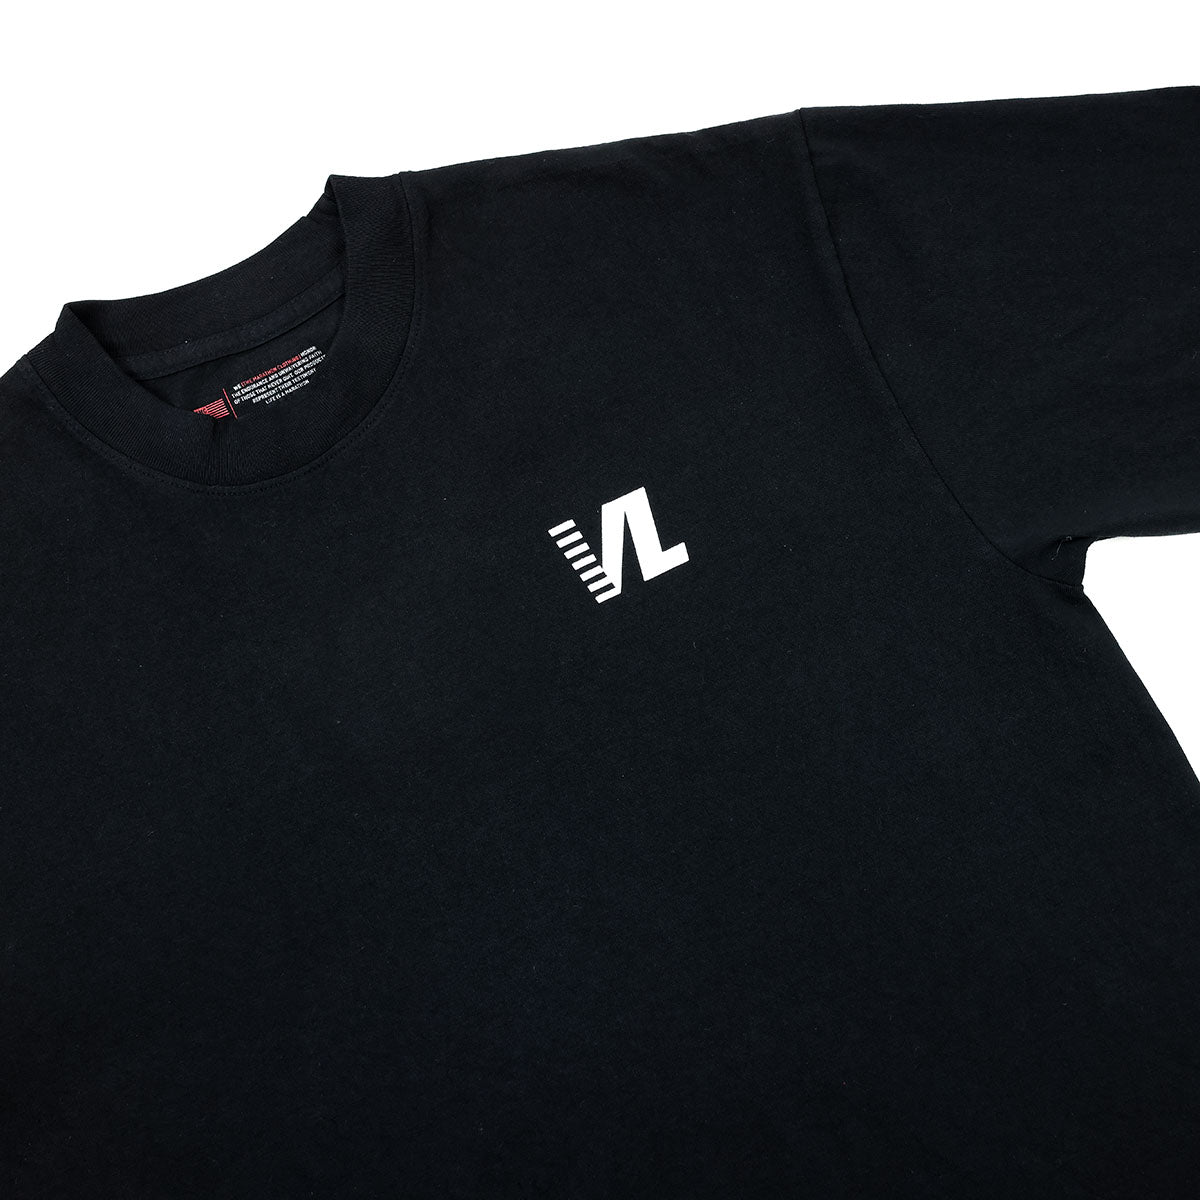 Victory Lap VL T-Shirt - Red/White – The Marathon Clothing